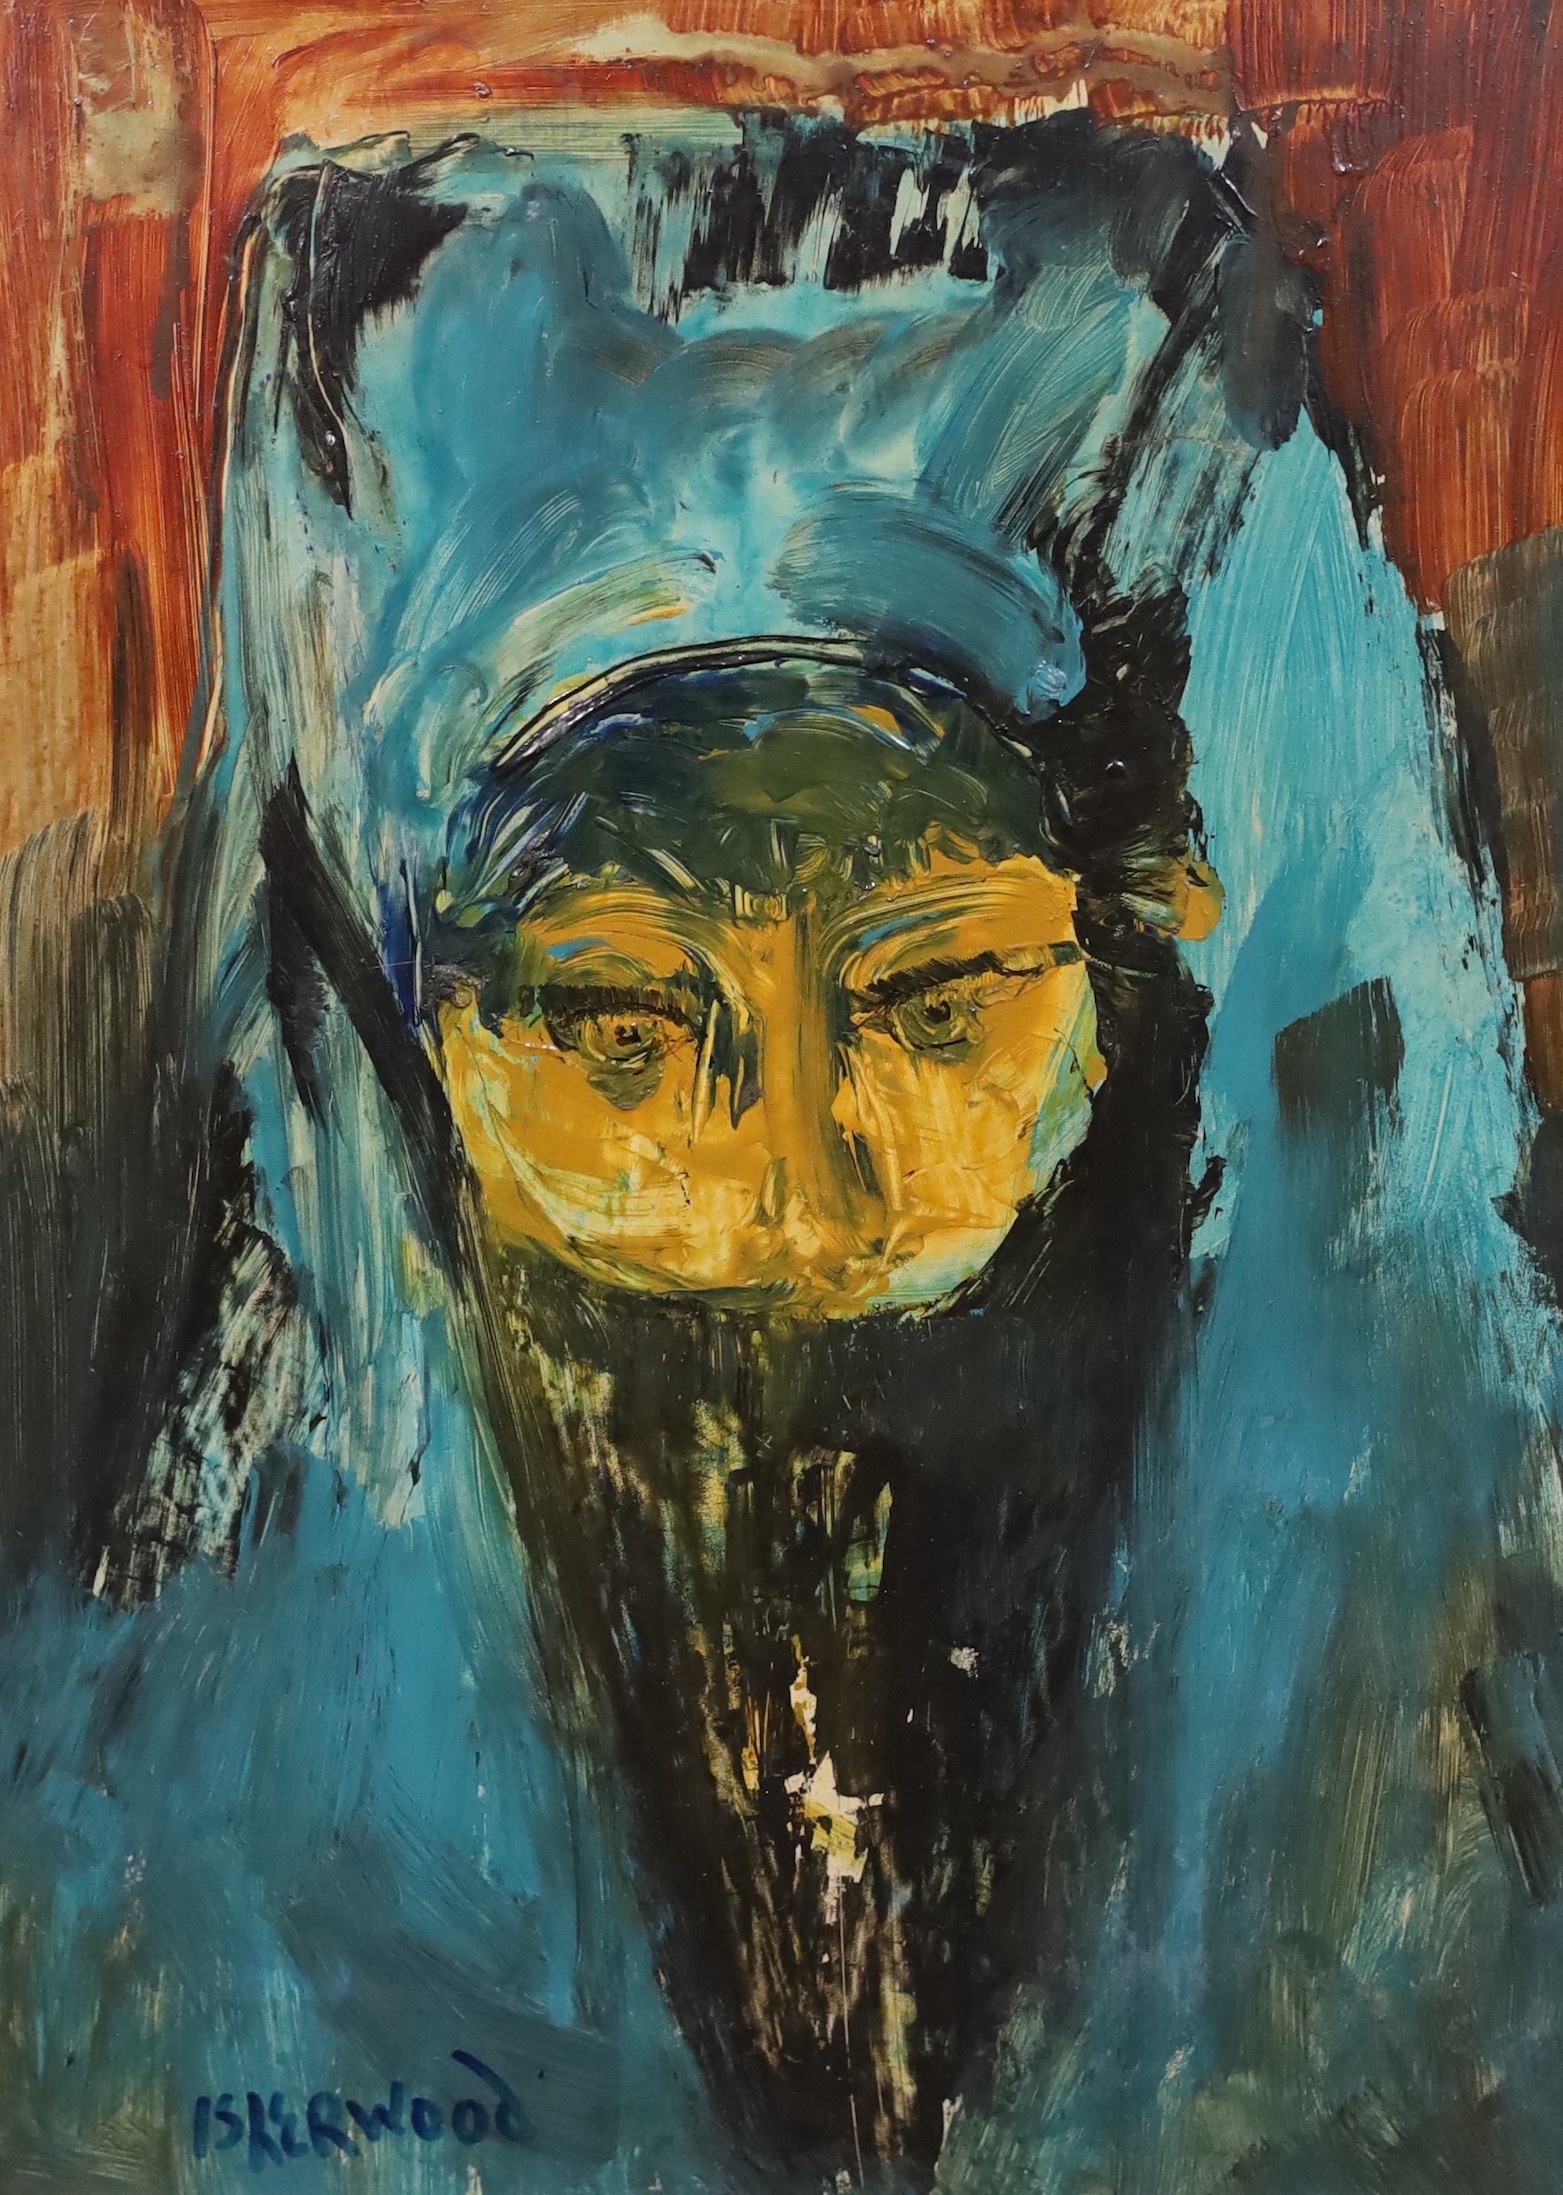 James Lawrence Isherwood (British, 1917-1989), 'Yashmak Woman', oil on board, 39 x 28cm